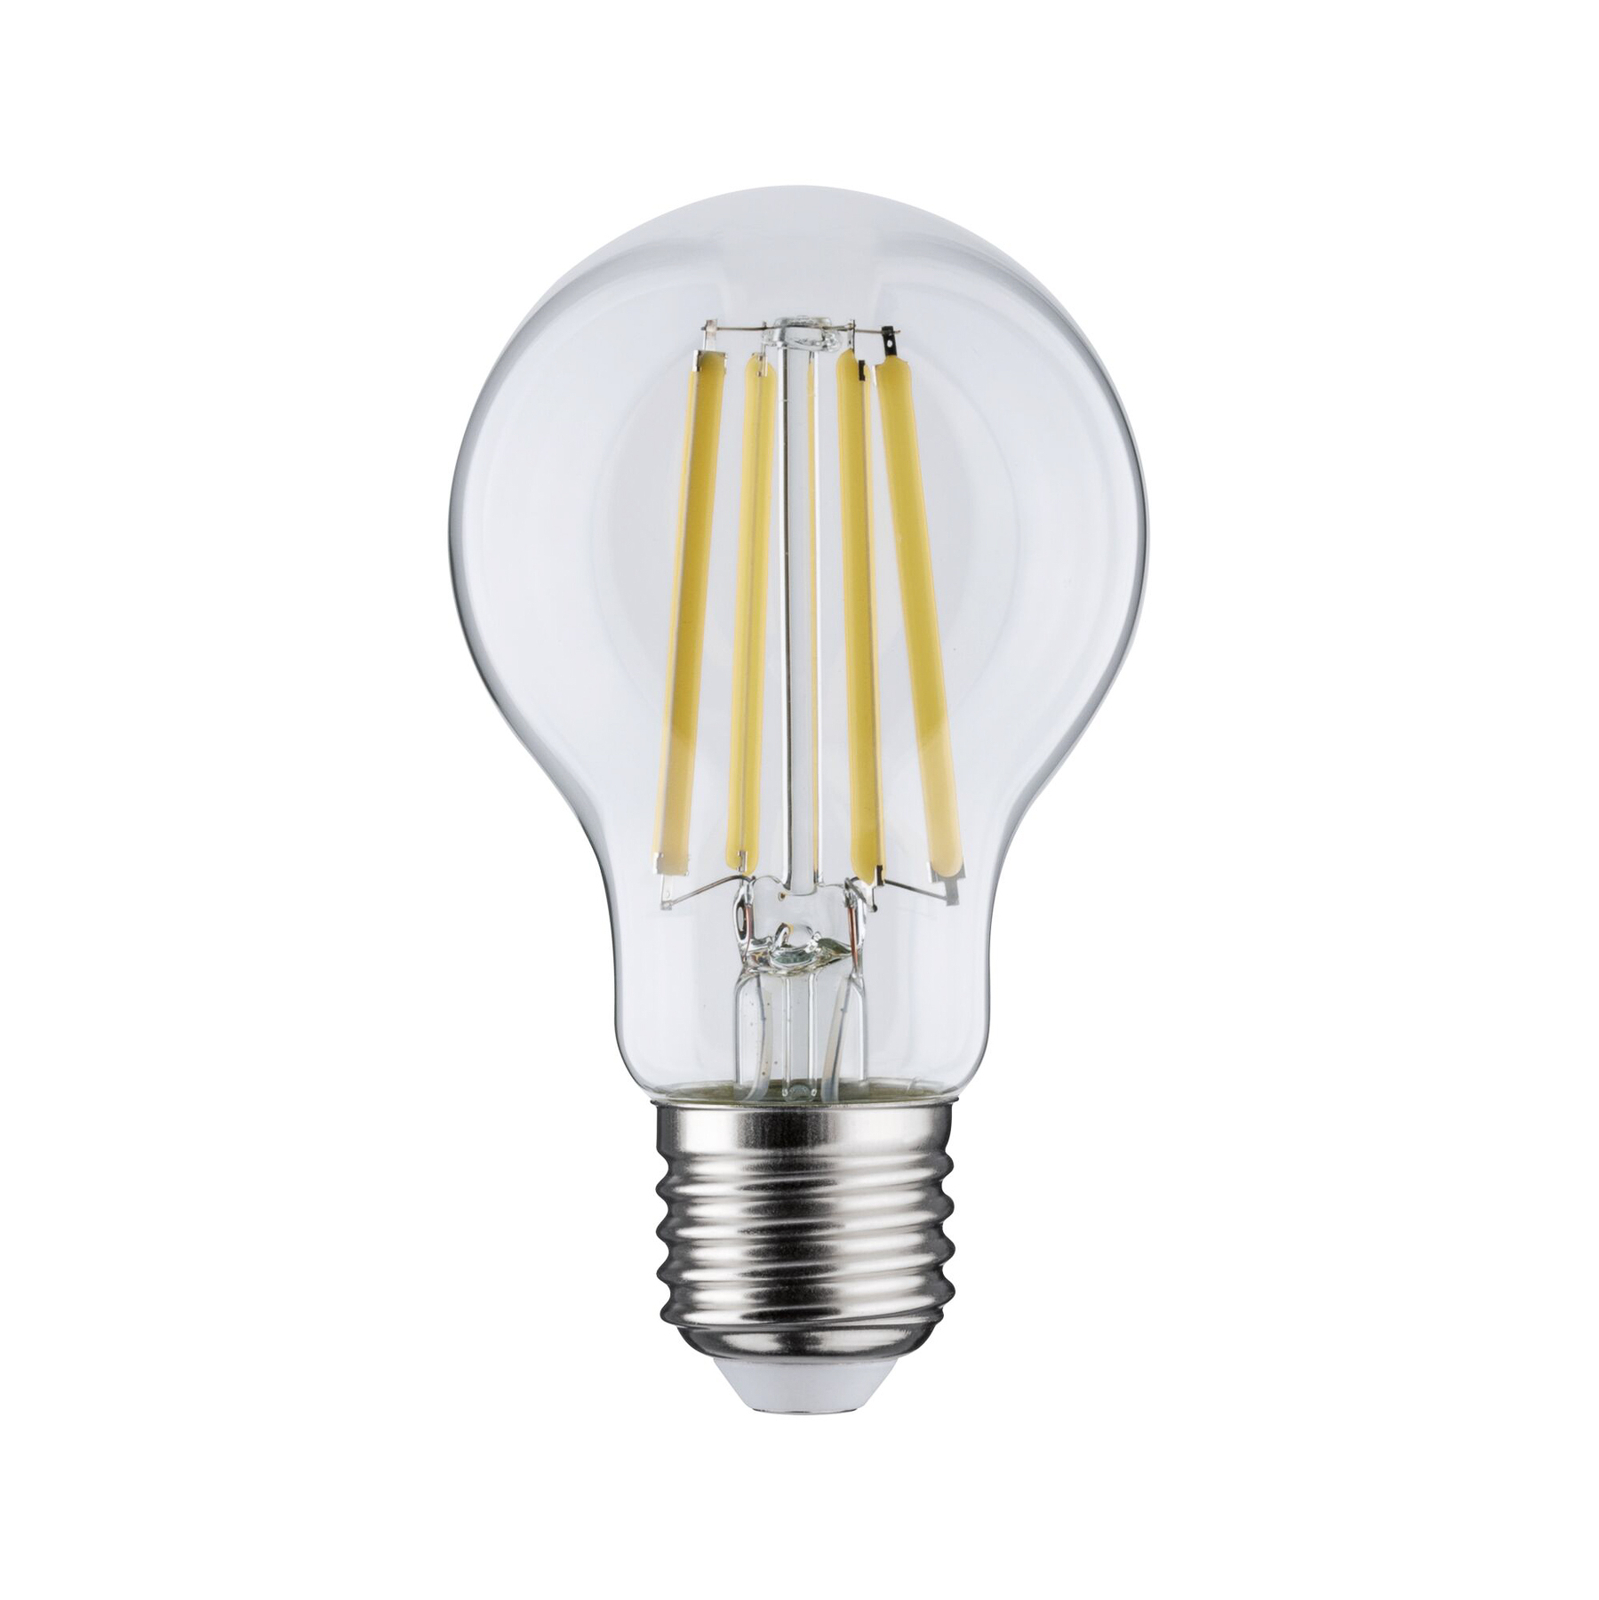 Paulmann Eco-Line LED bulb E27 4W 840lm 4,000K